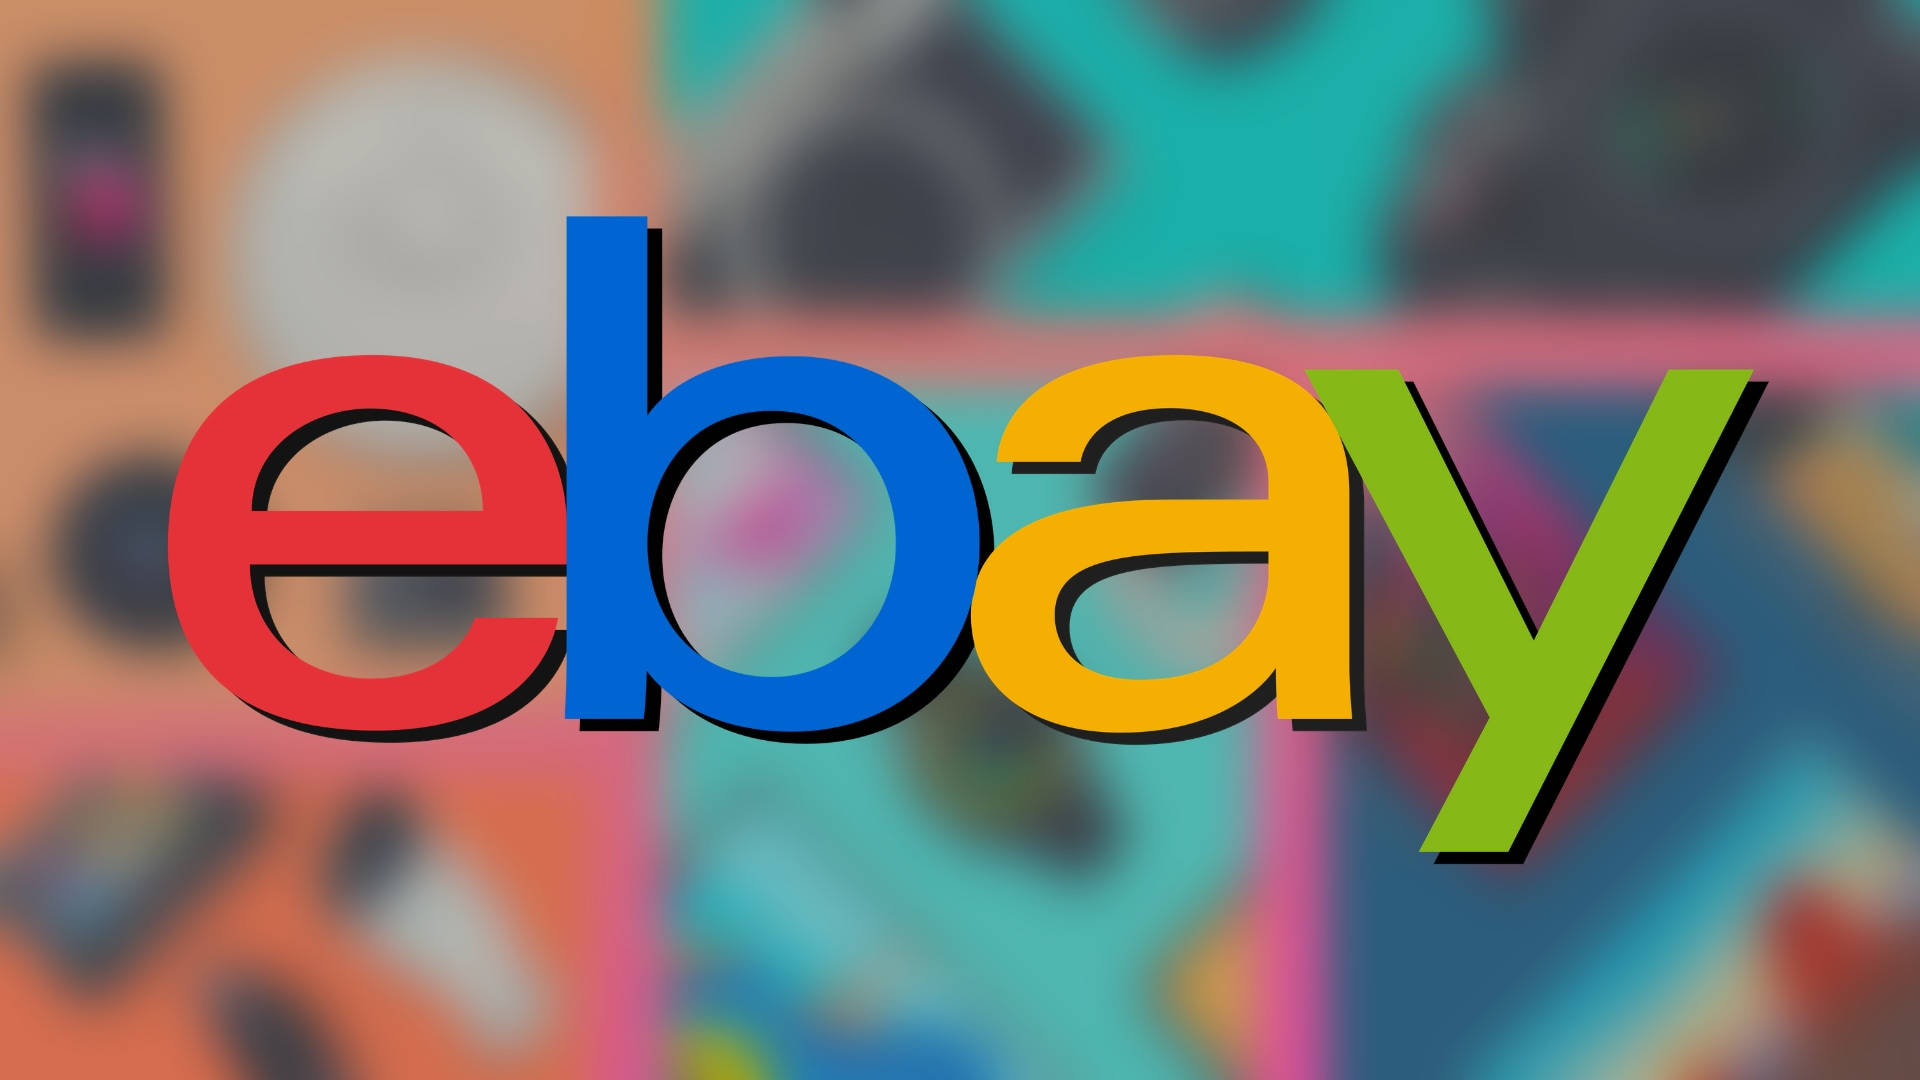 Ebay Blurry Background Wallpaper